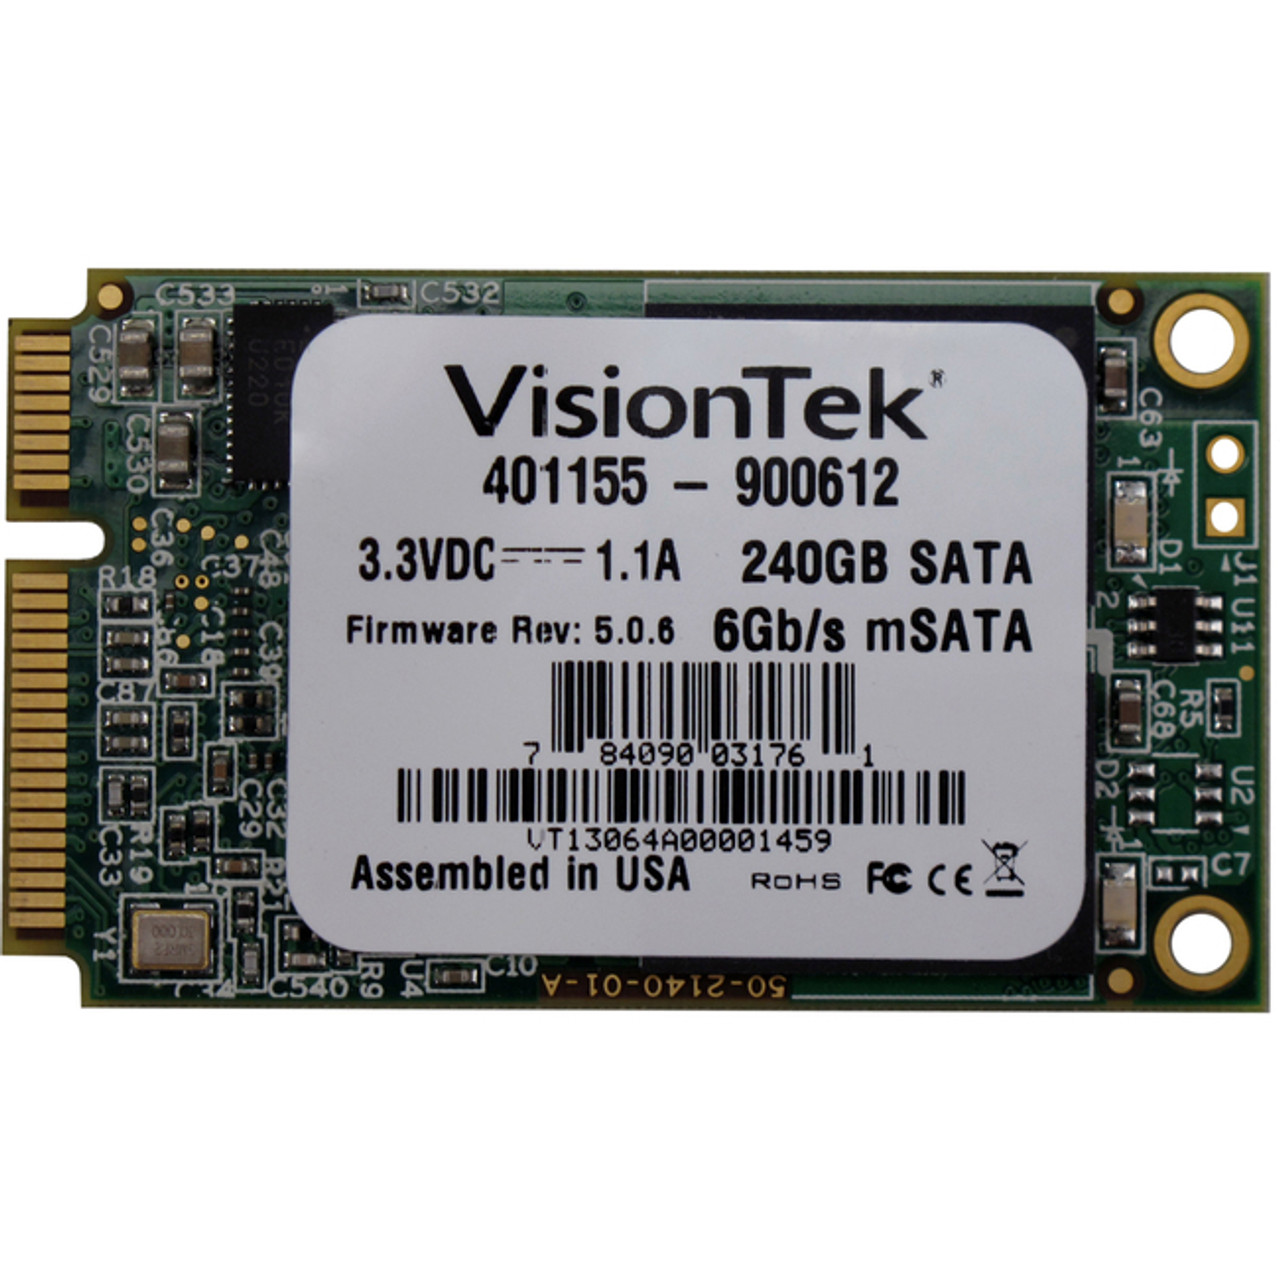 VisionTek 240GB mSATA SATA III Internal SSD - 900612